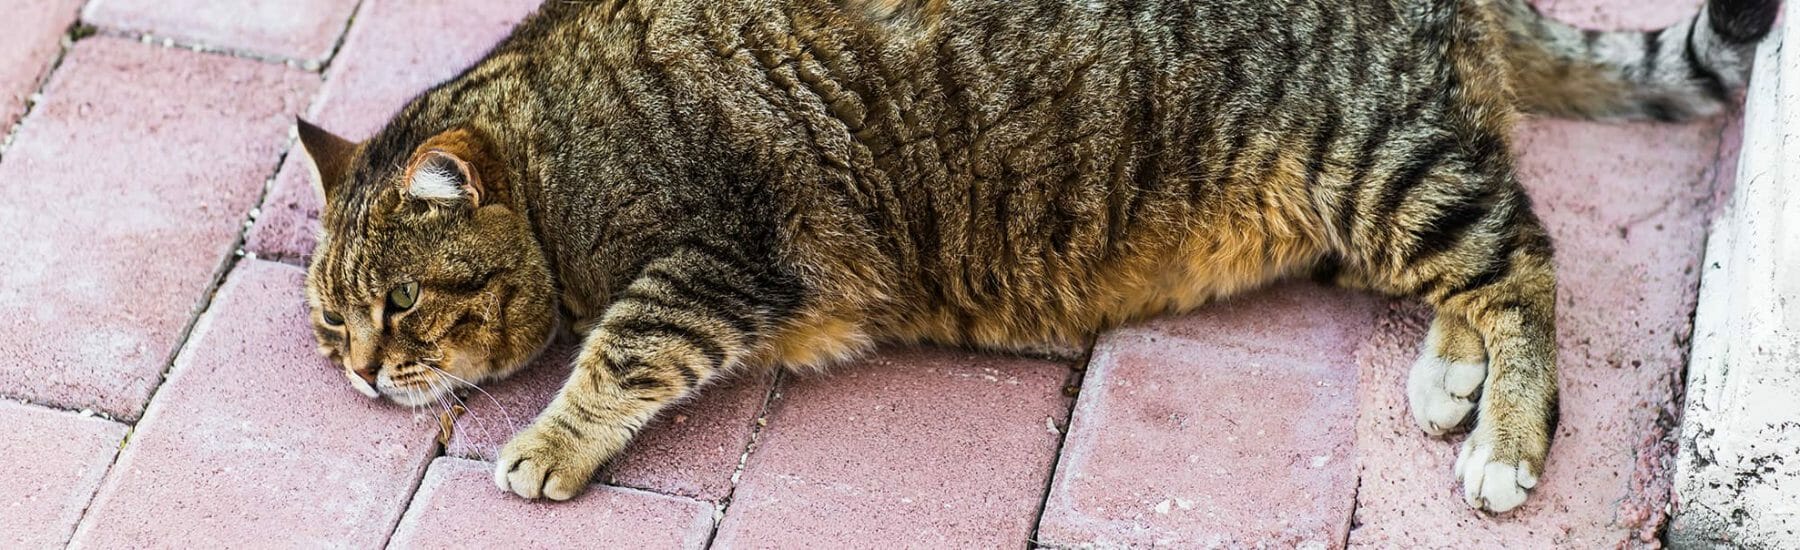 Overweight cat lying on brick floor